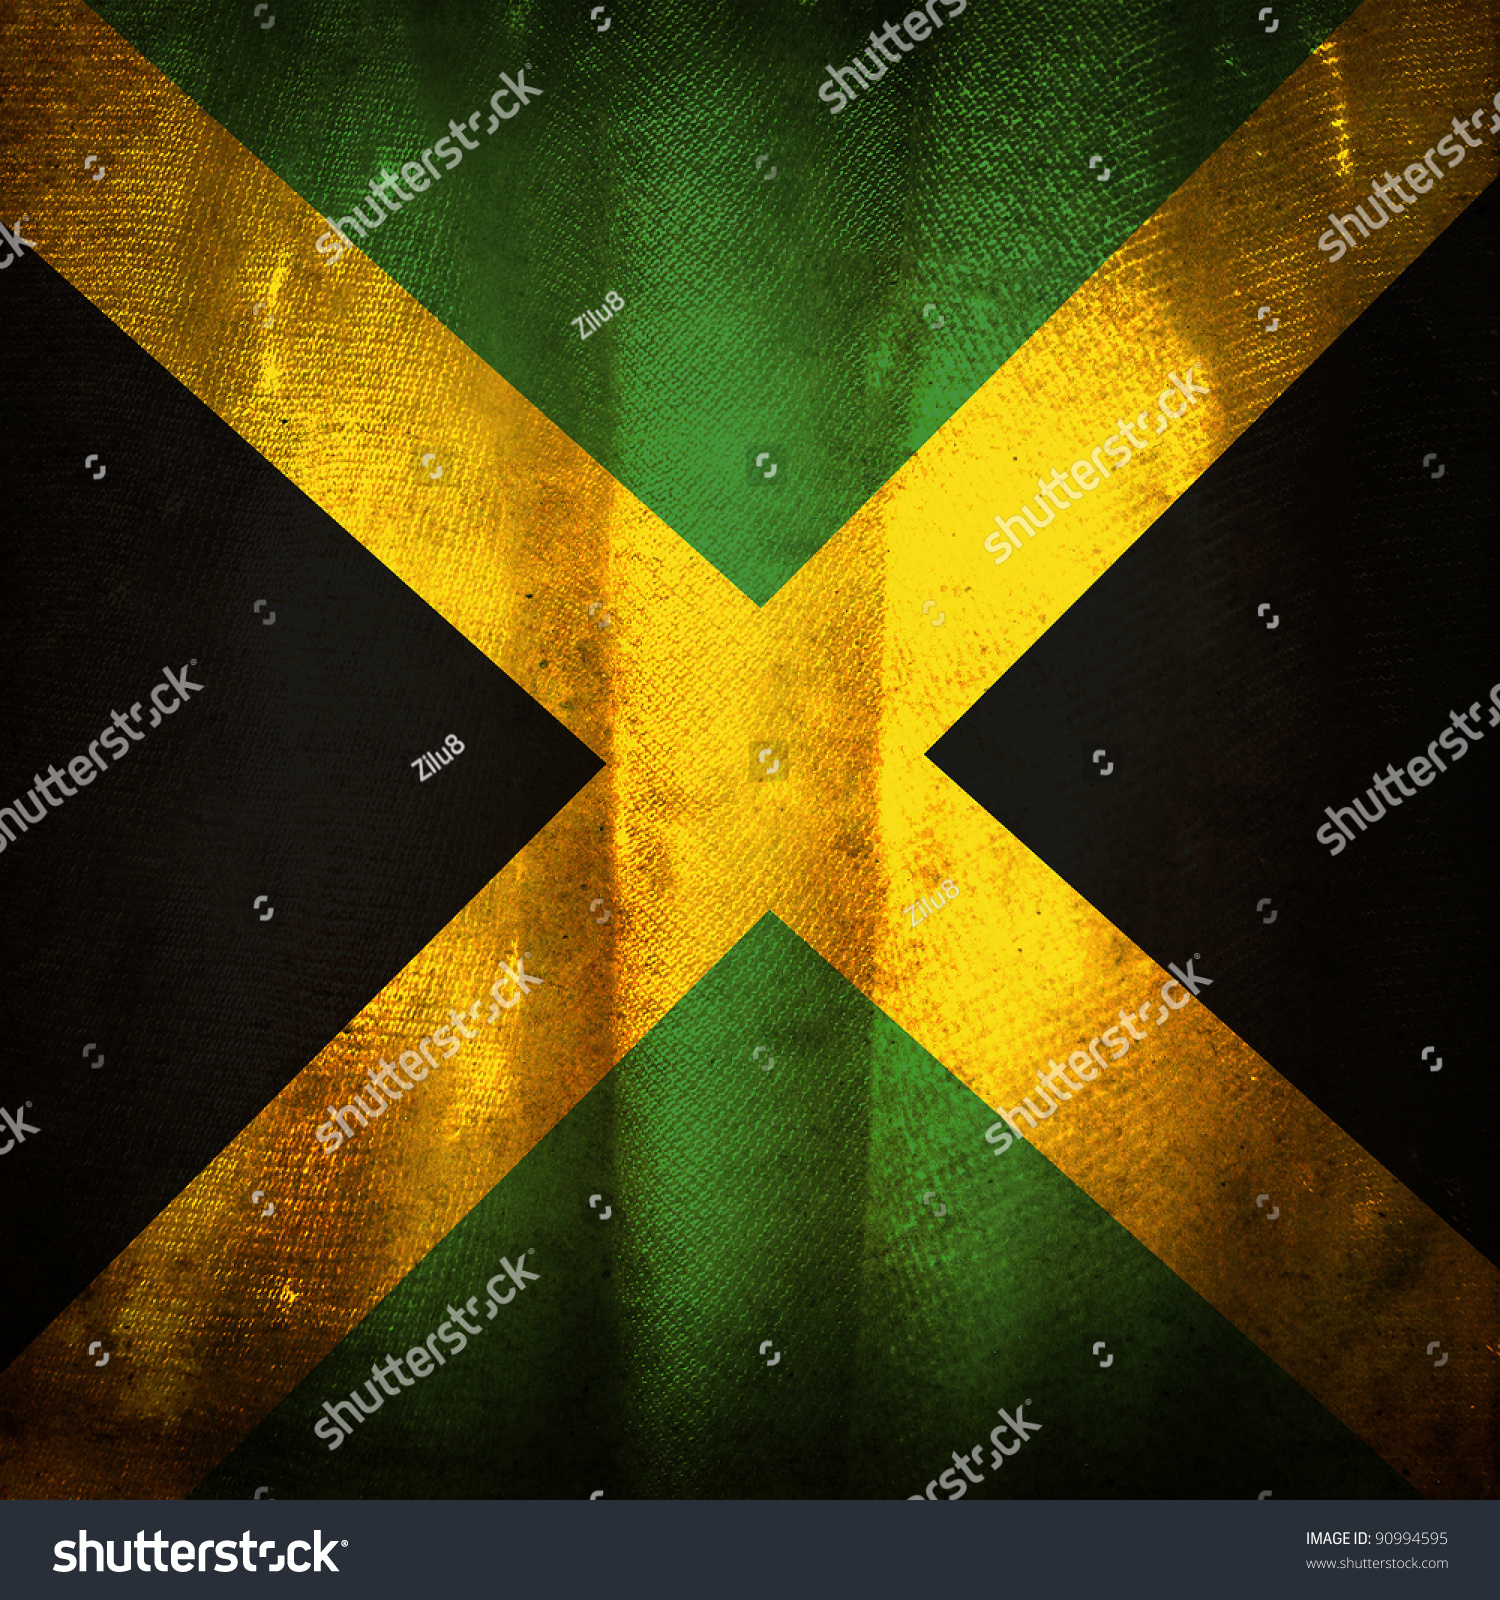 Old Grunge Flag Jamaica Stock Photo 90994595 - Shutterstock